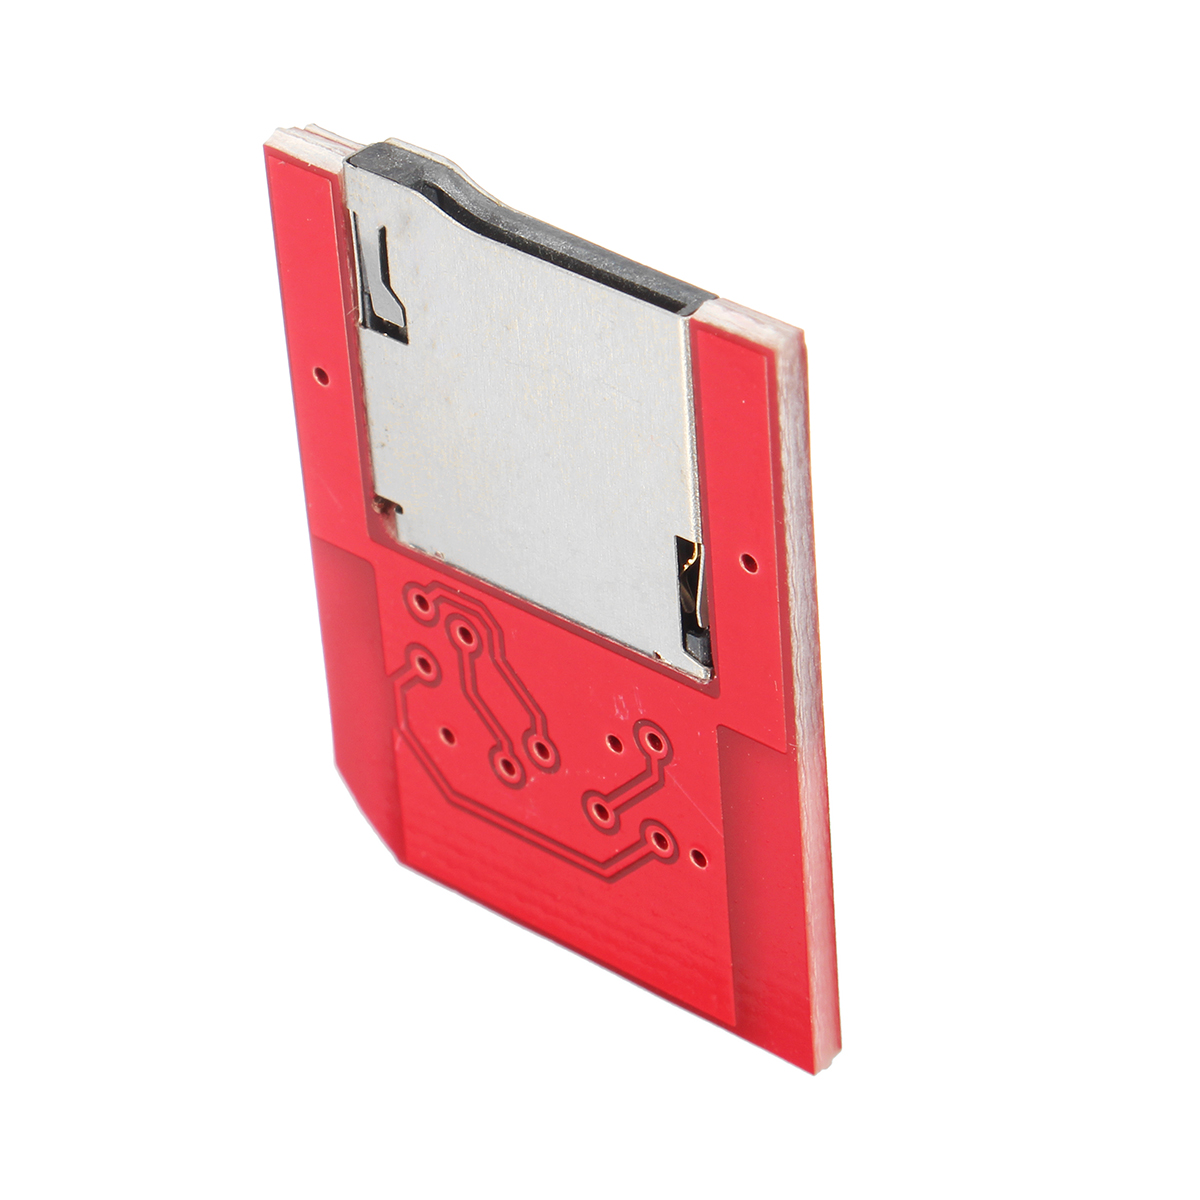 Mini-Game-Card-Cover-Adapter-For-PSVITA-SD2-Vita-PS-Vita-1000-2000-SD-Memory-Card-1207134-5